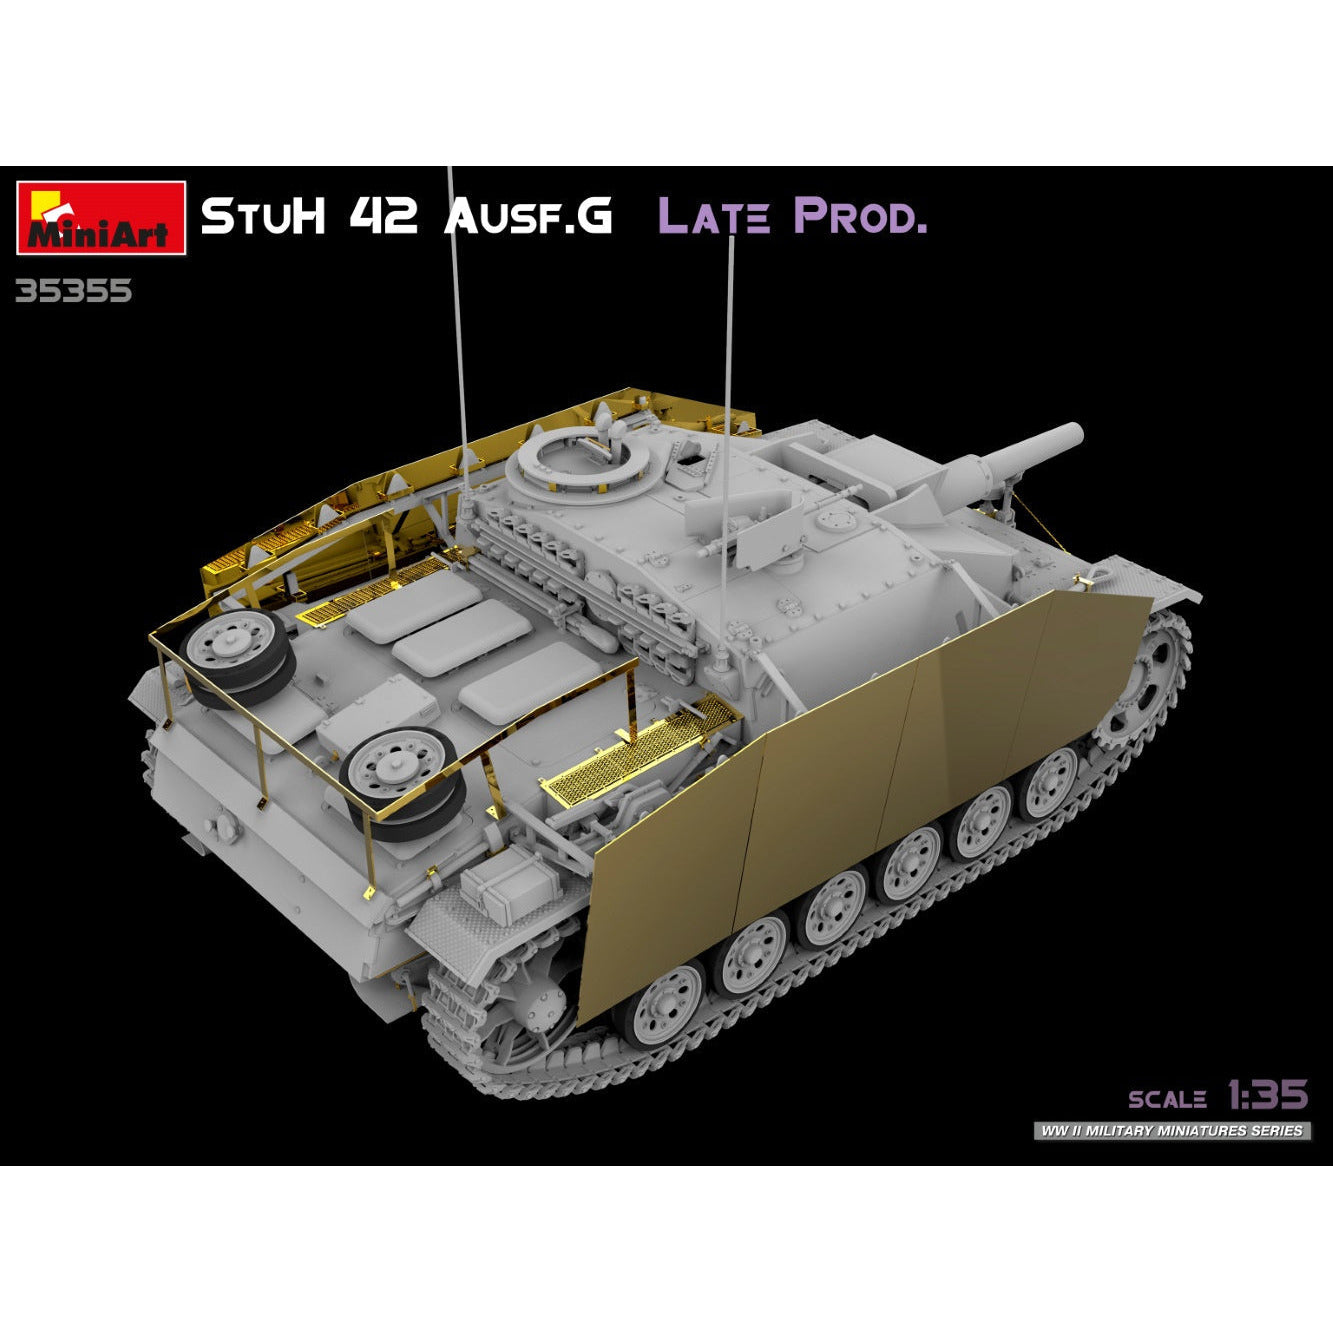 MINIART 1/35 StuH 42 Ausf. G Late Prod.